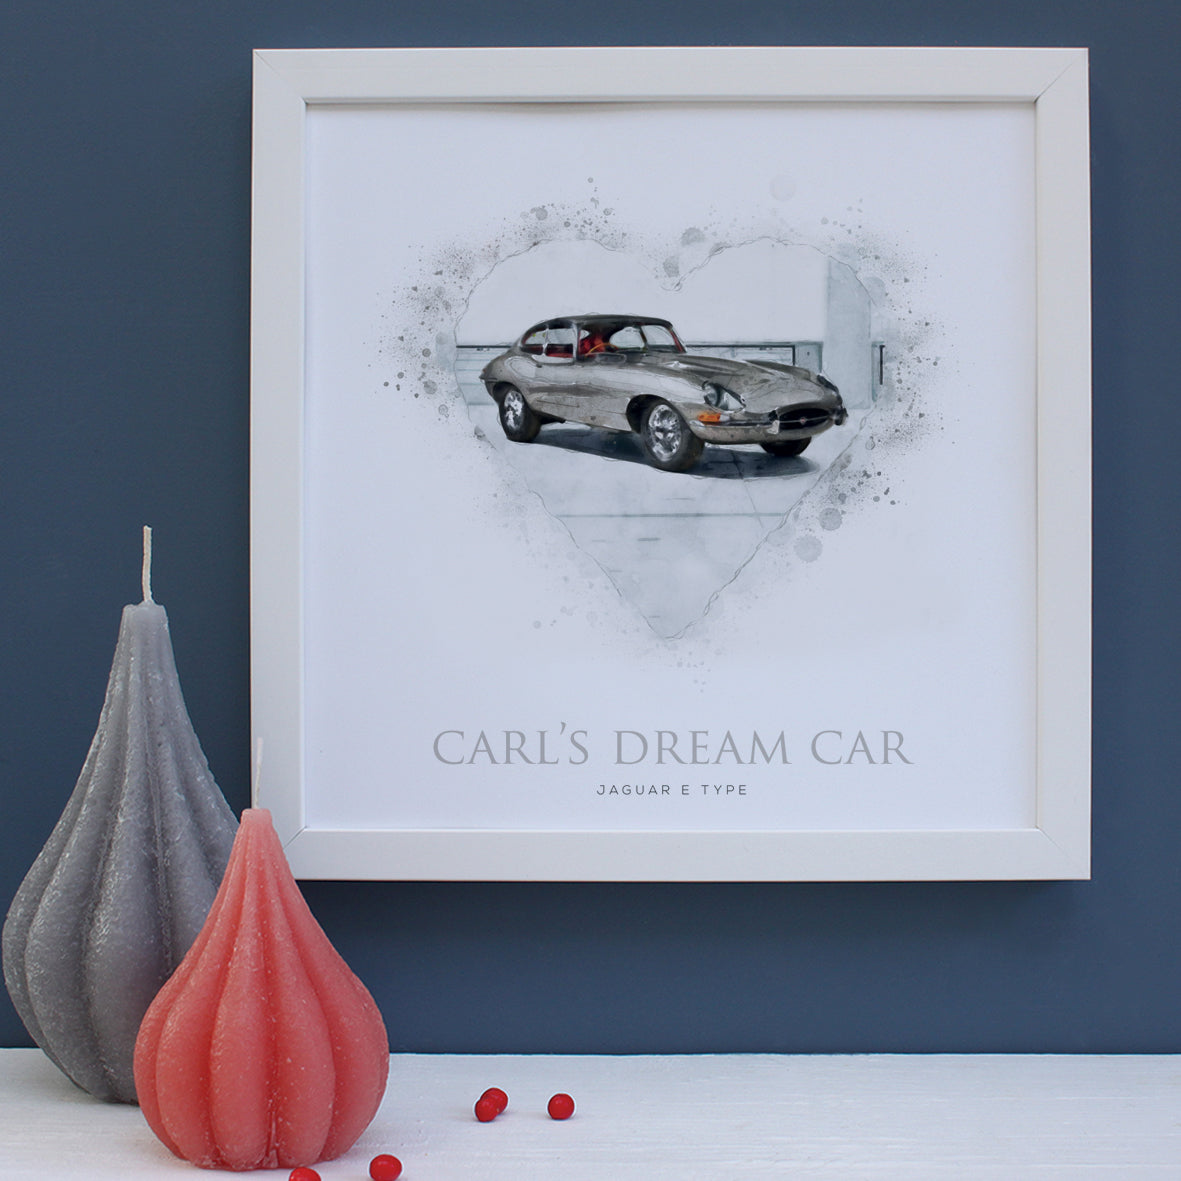 Jaguar E type illustration in a heart in a white frame